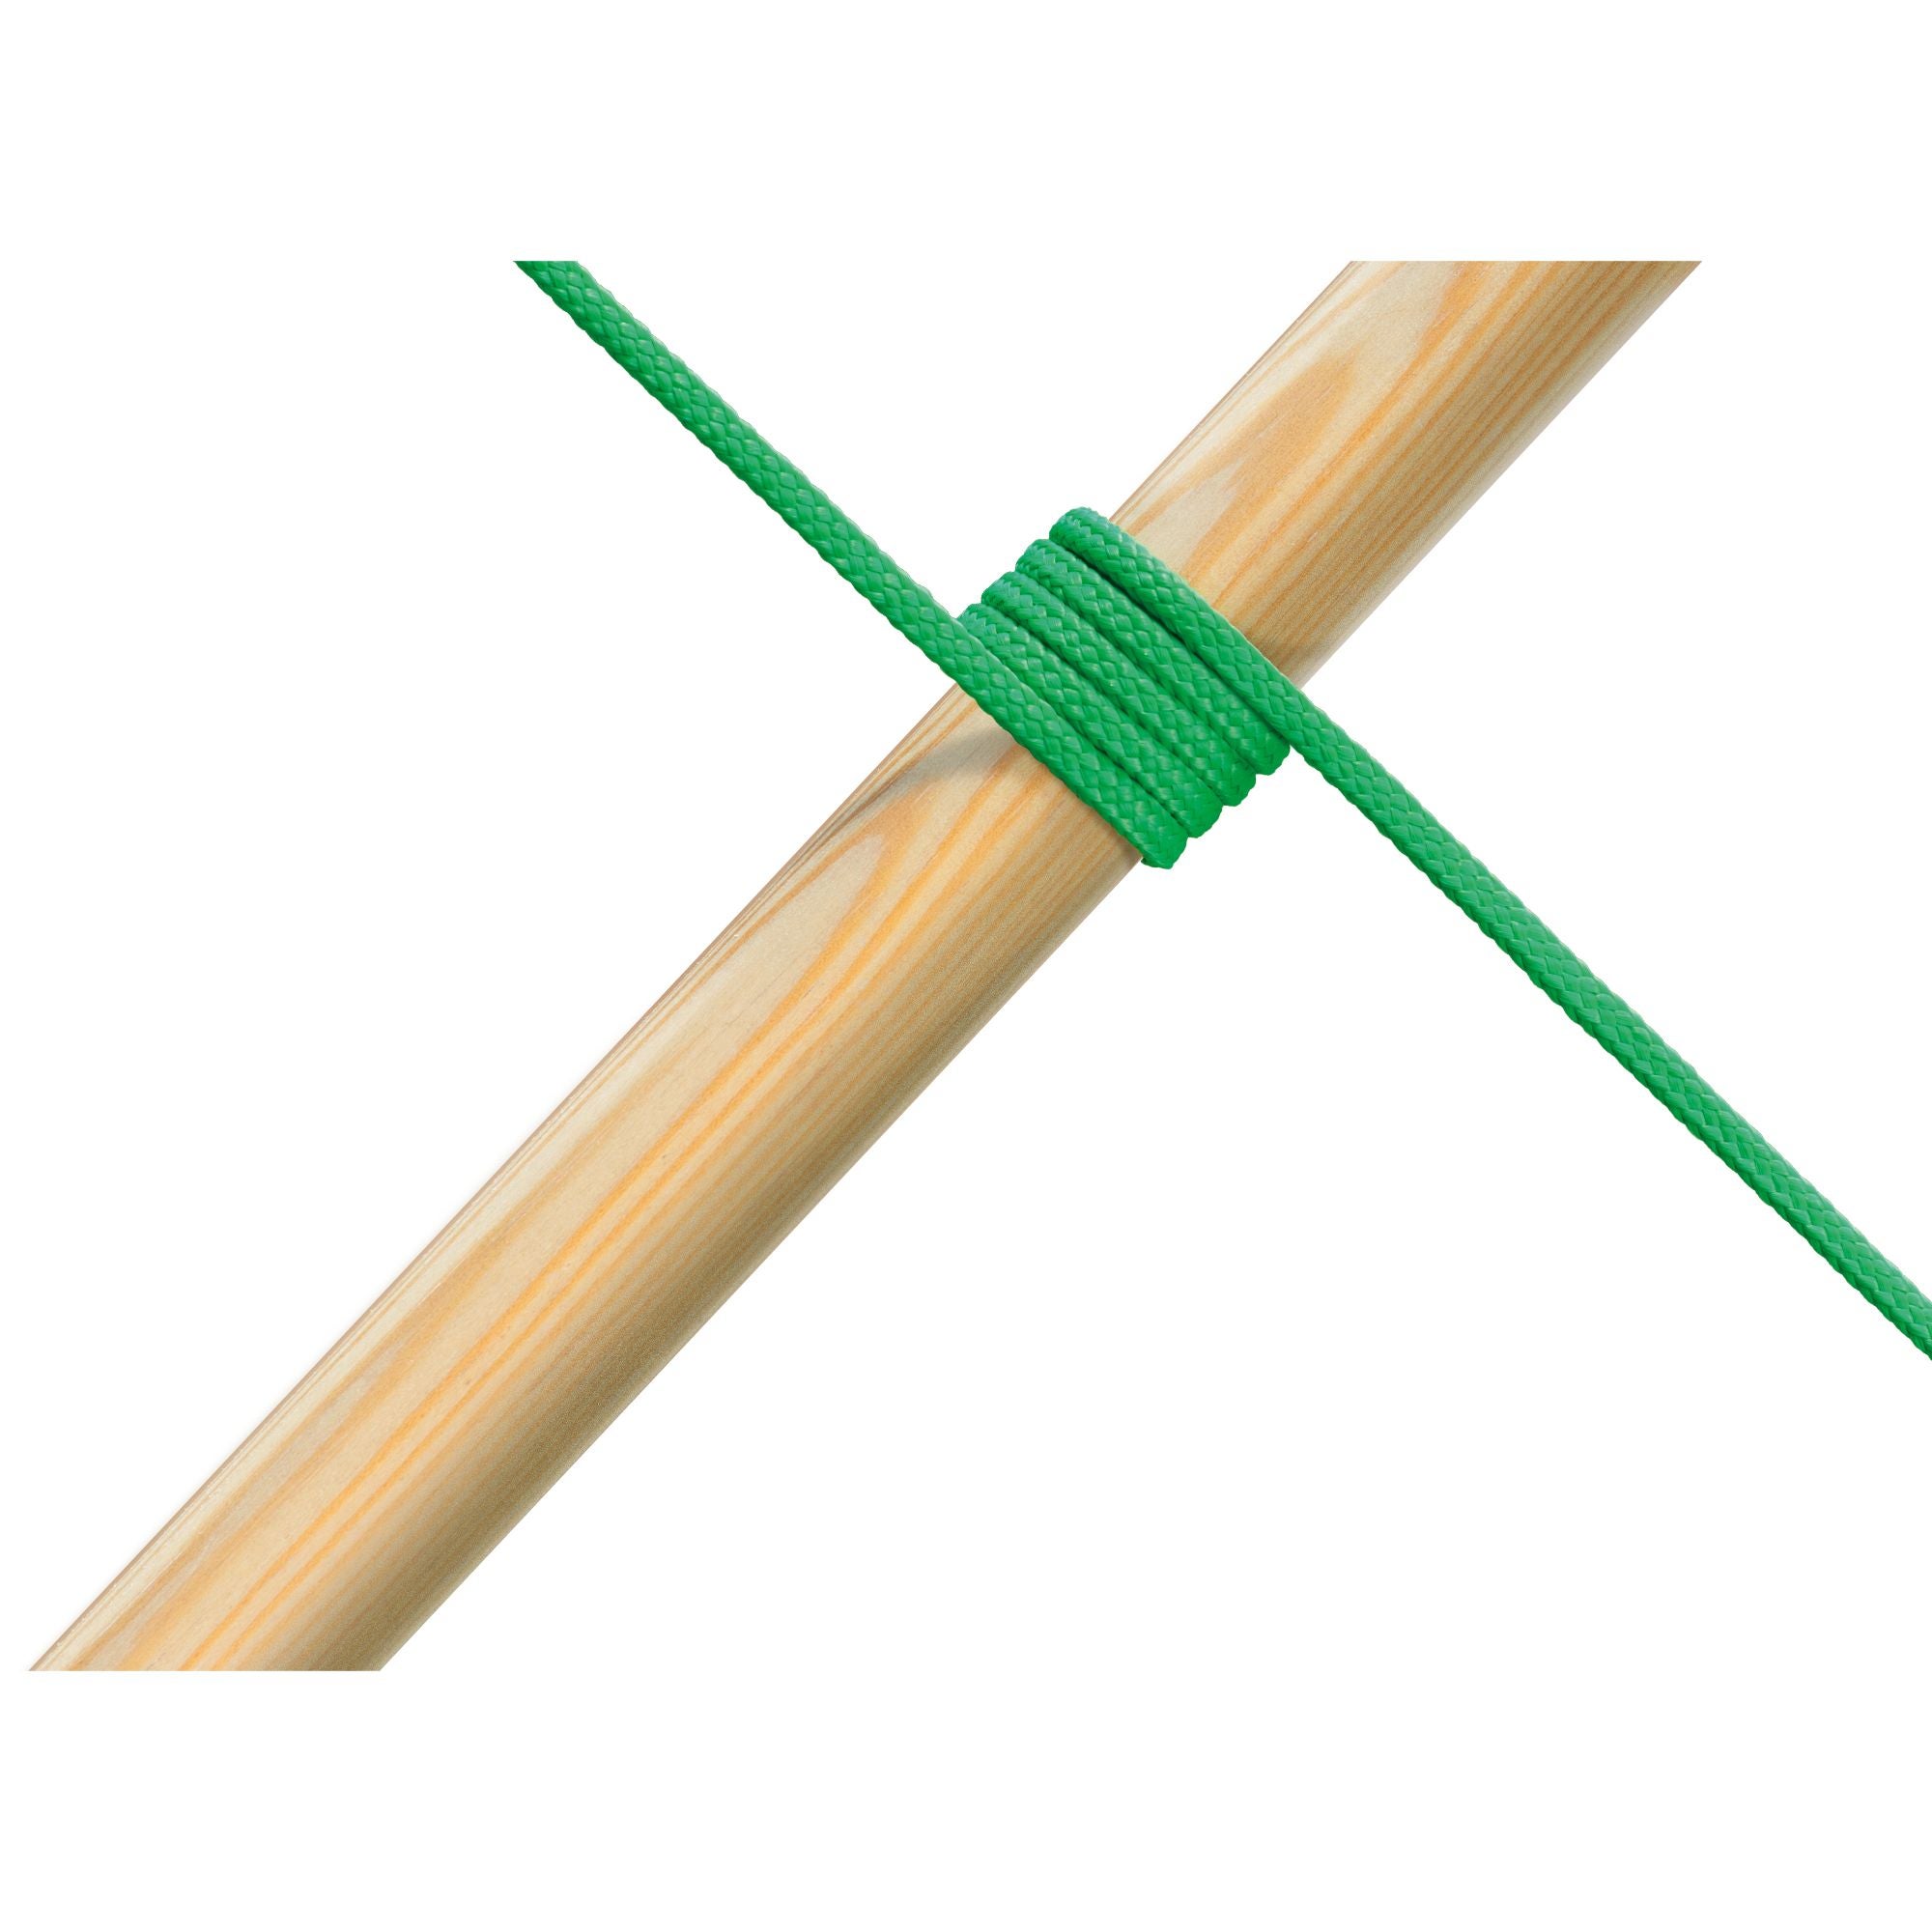 Snur (Sfoara) 3 mm PES impletit, Negru/Verde, (90-44), 25 m 